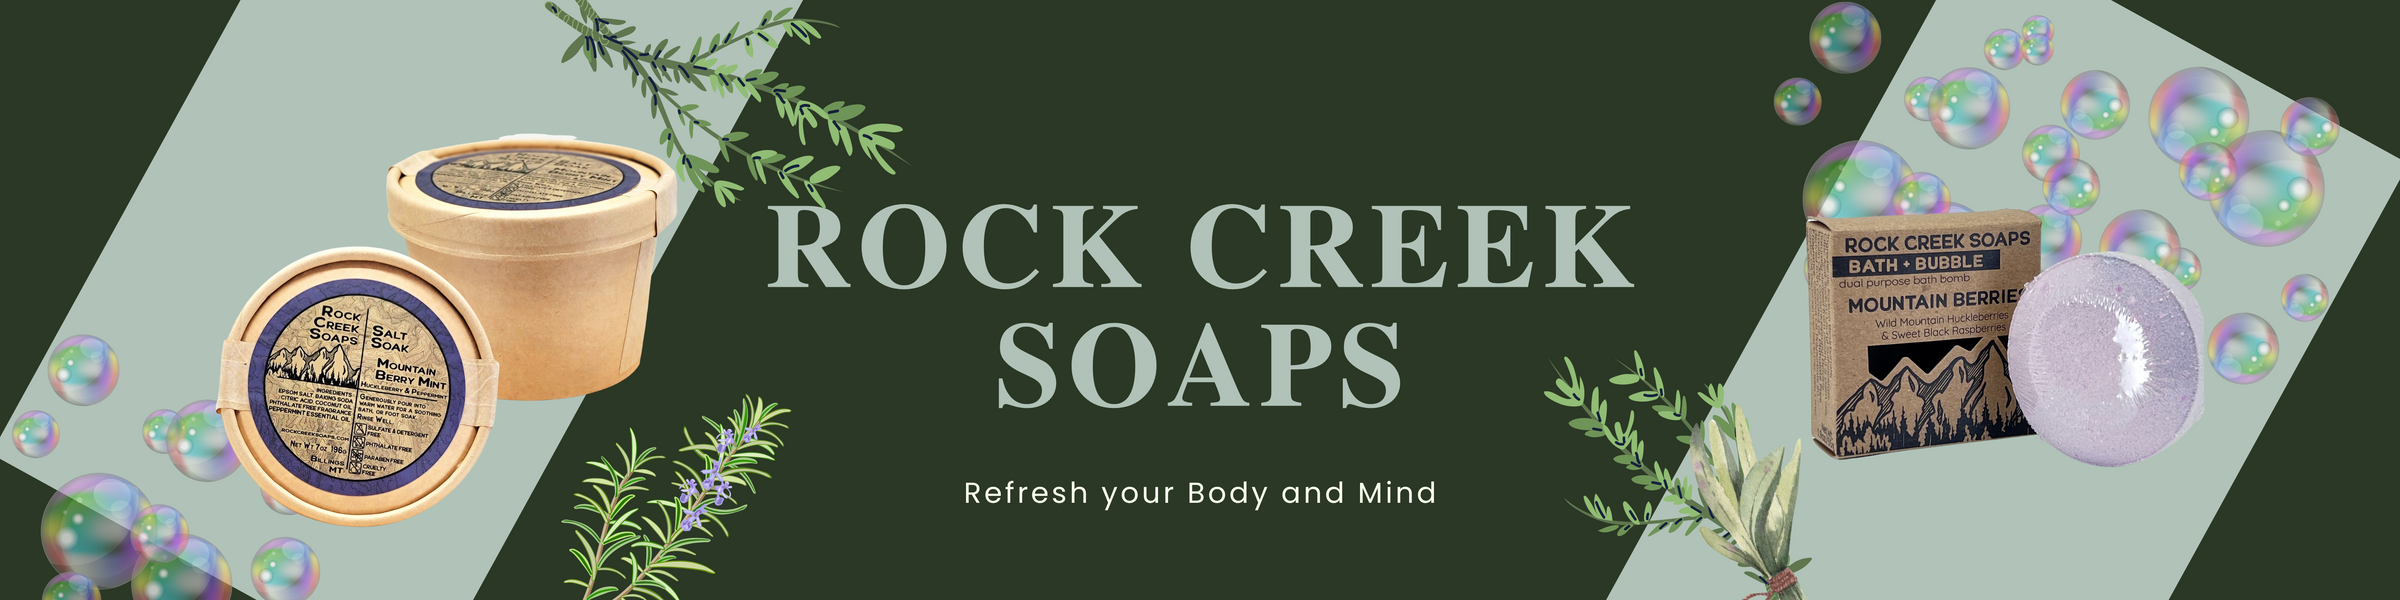 Rock Creek Soaps banner, bath bomb and huckleberry salt soak